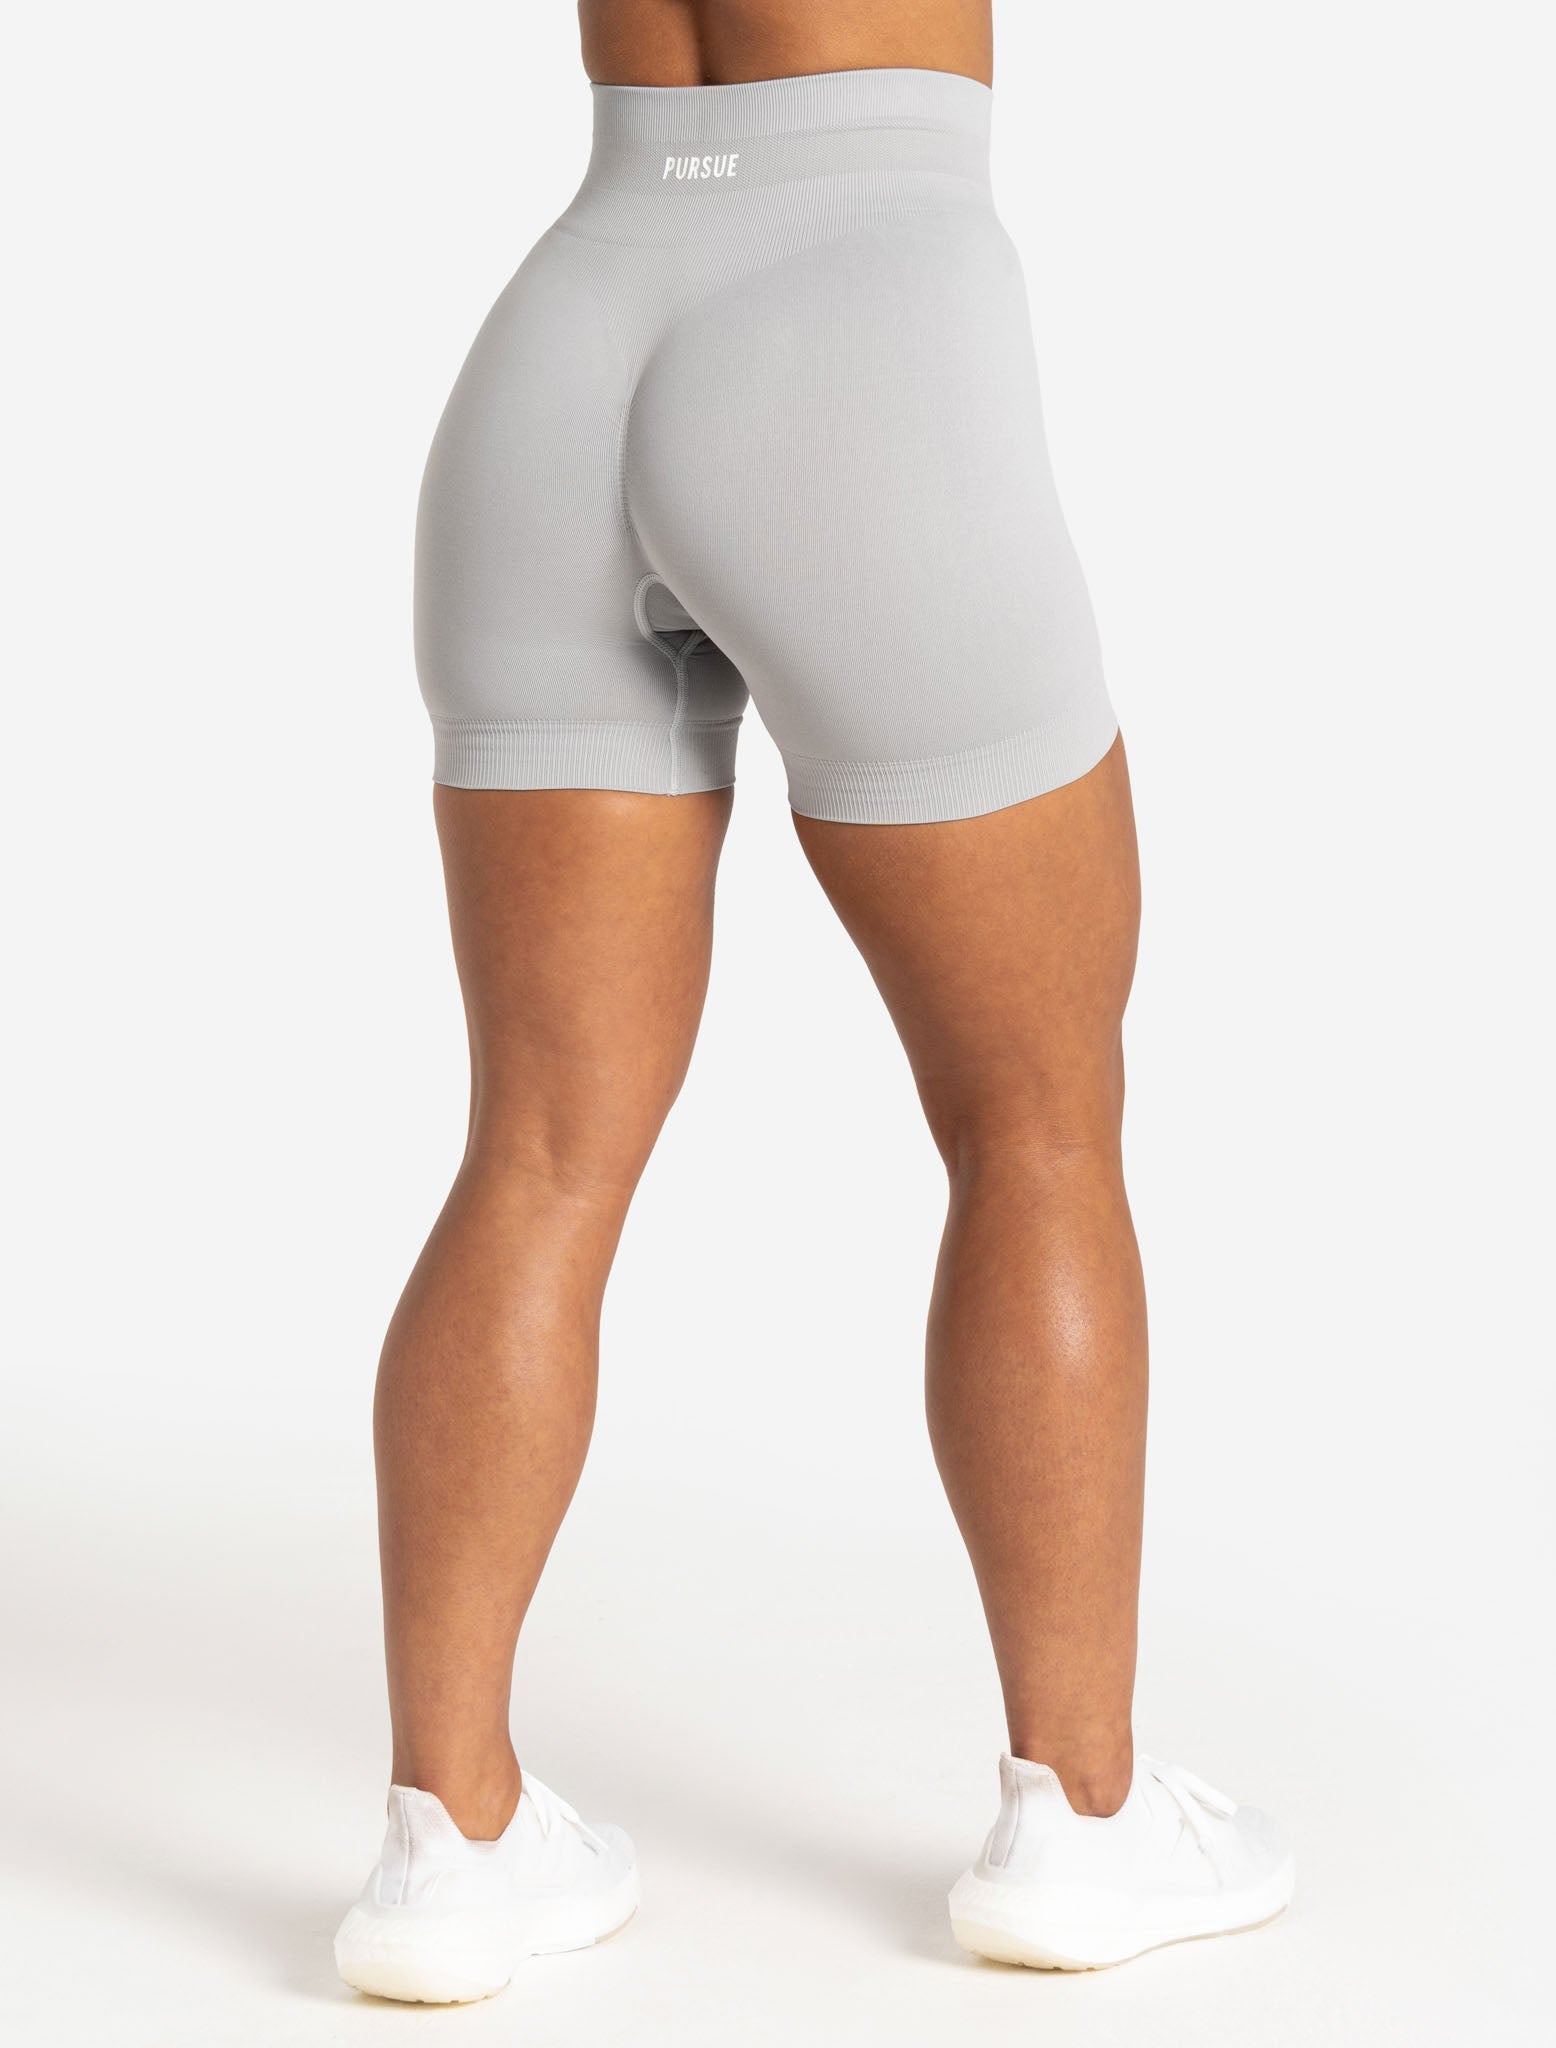 Scrunch Seamless Shorts / Grey Pursue Fitness 2